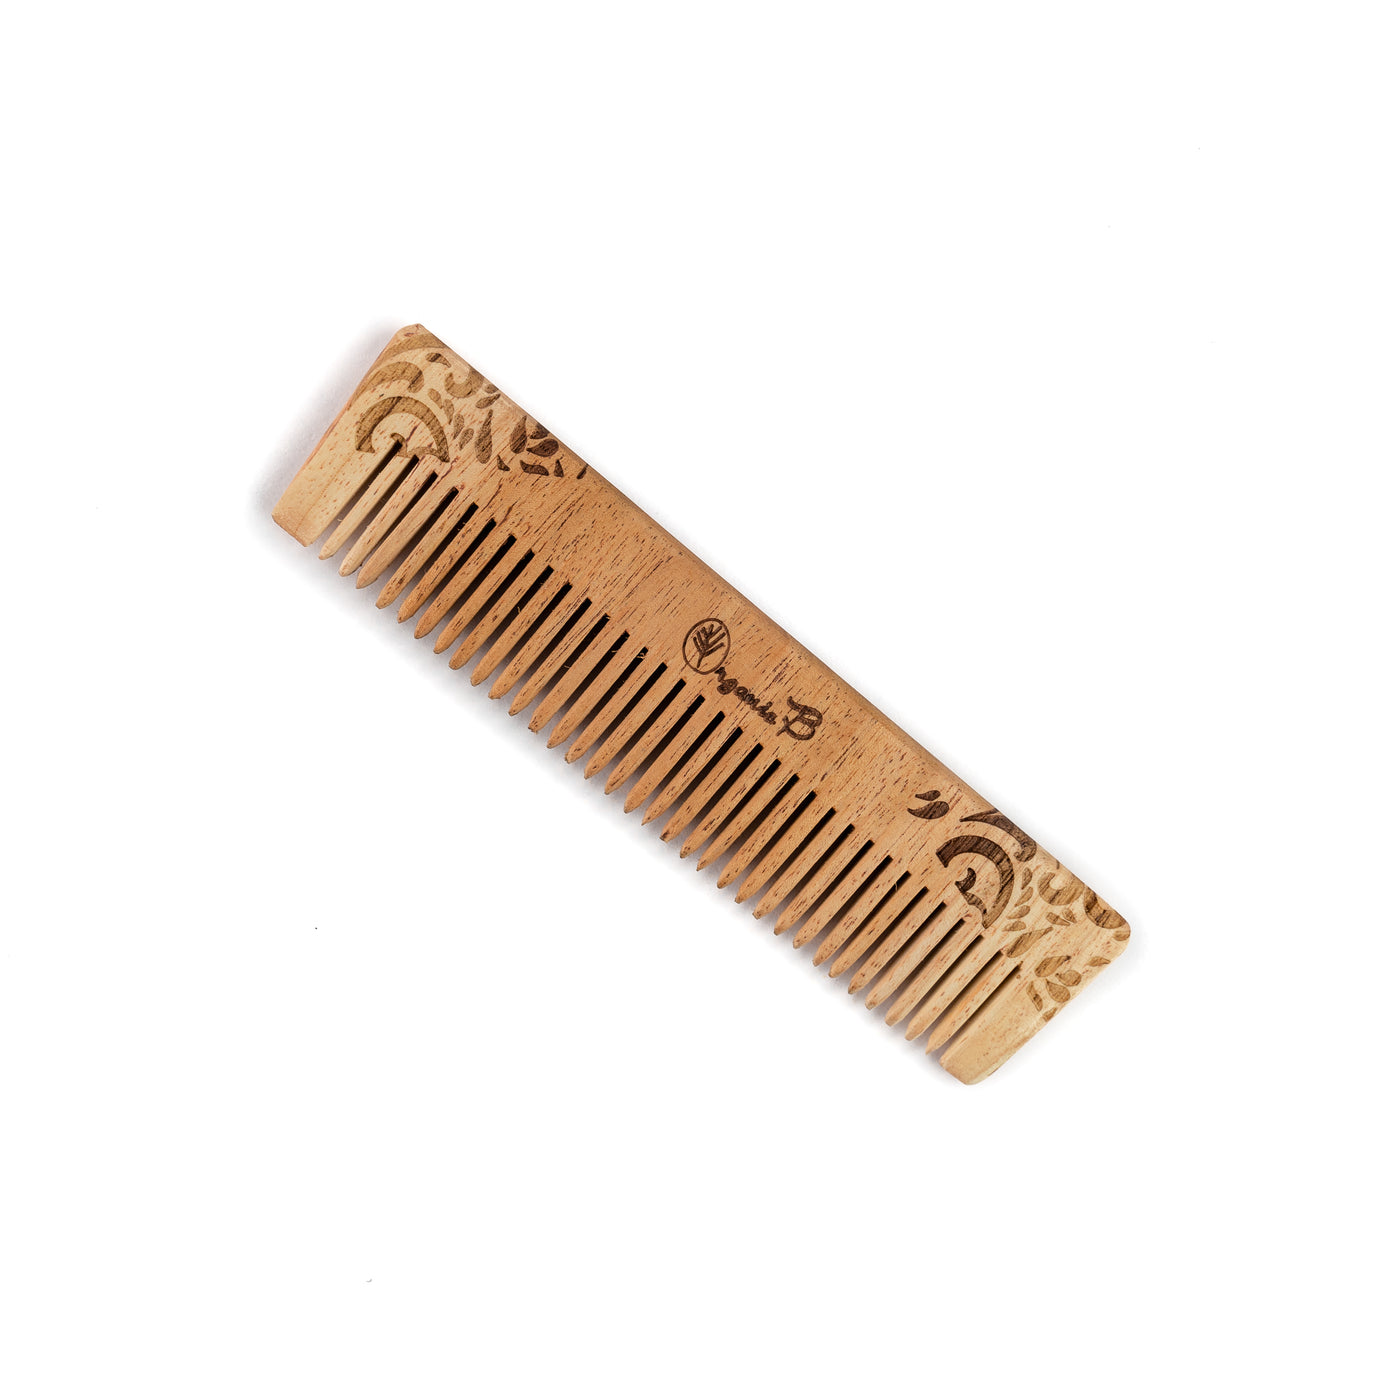 Pocket size neem wood comb